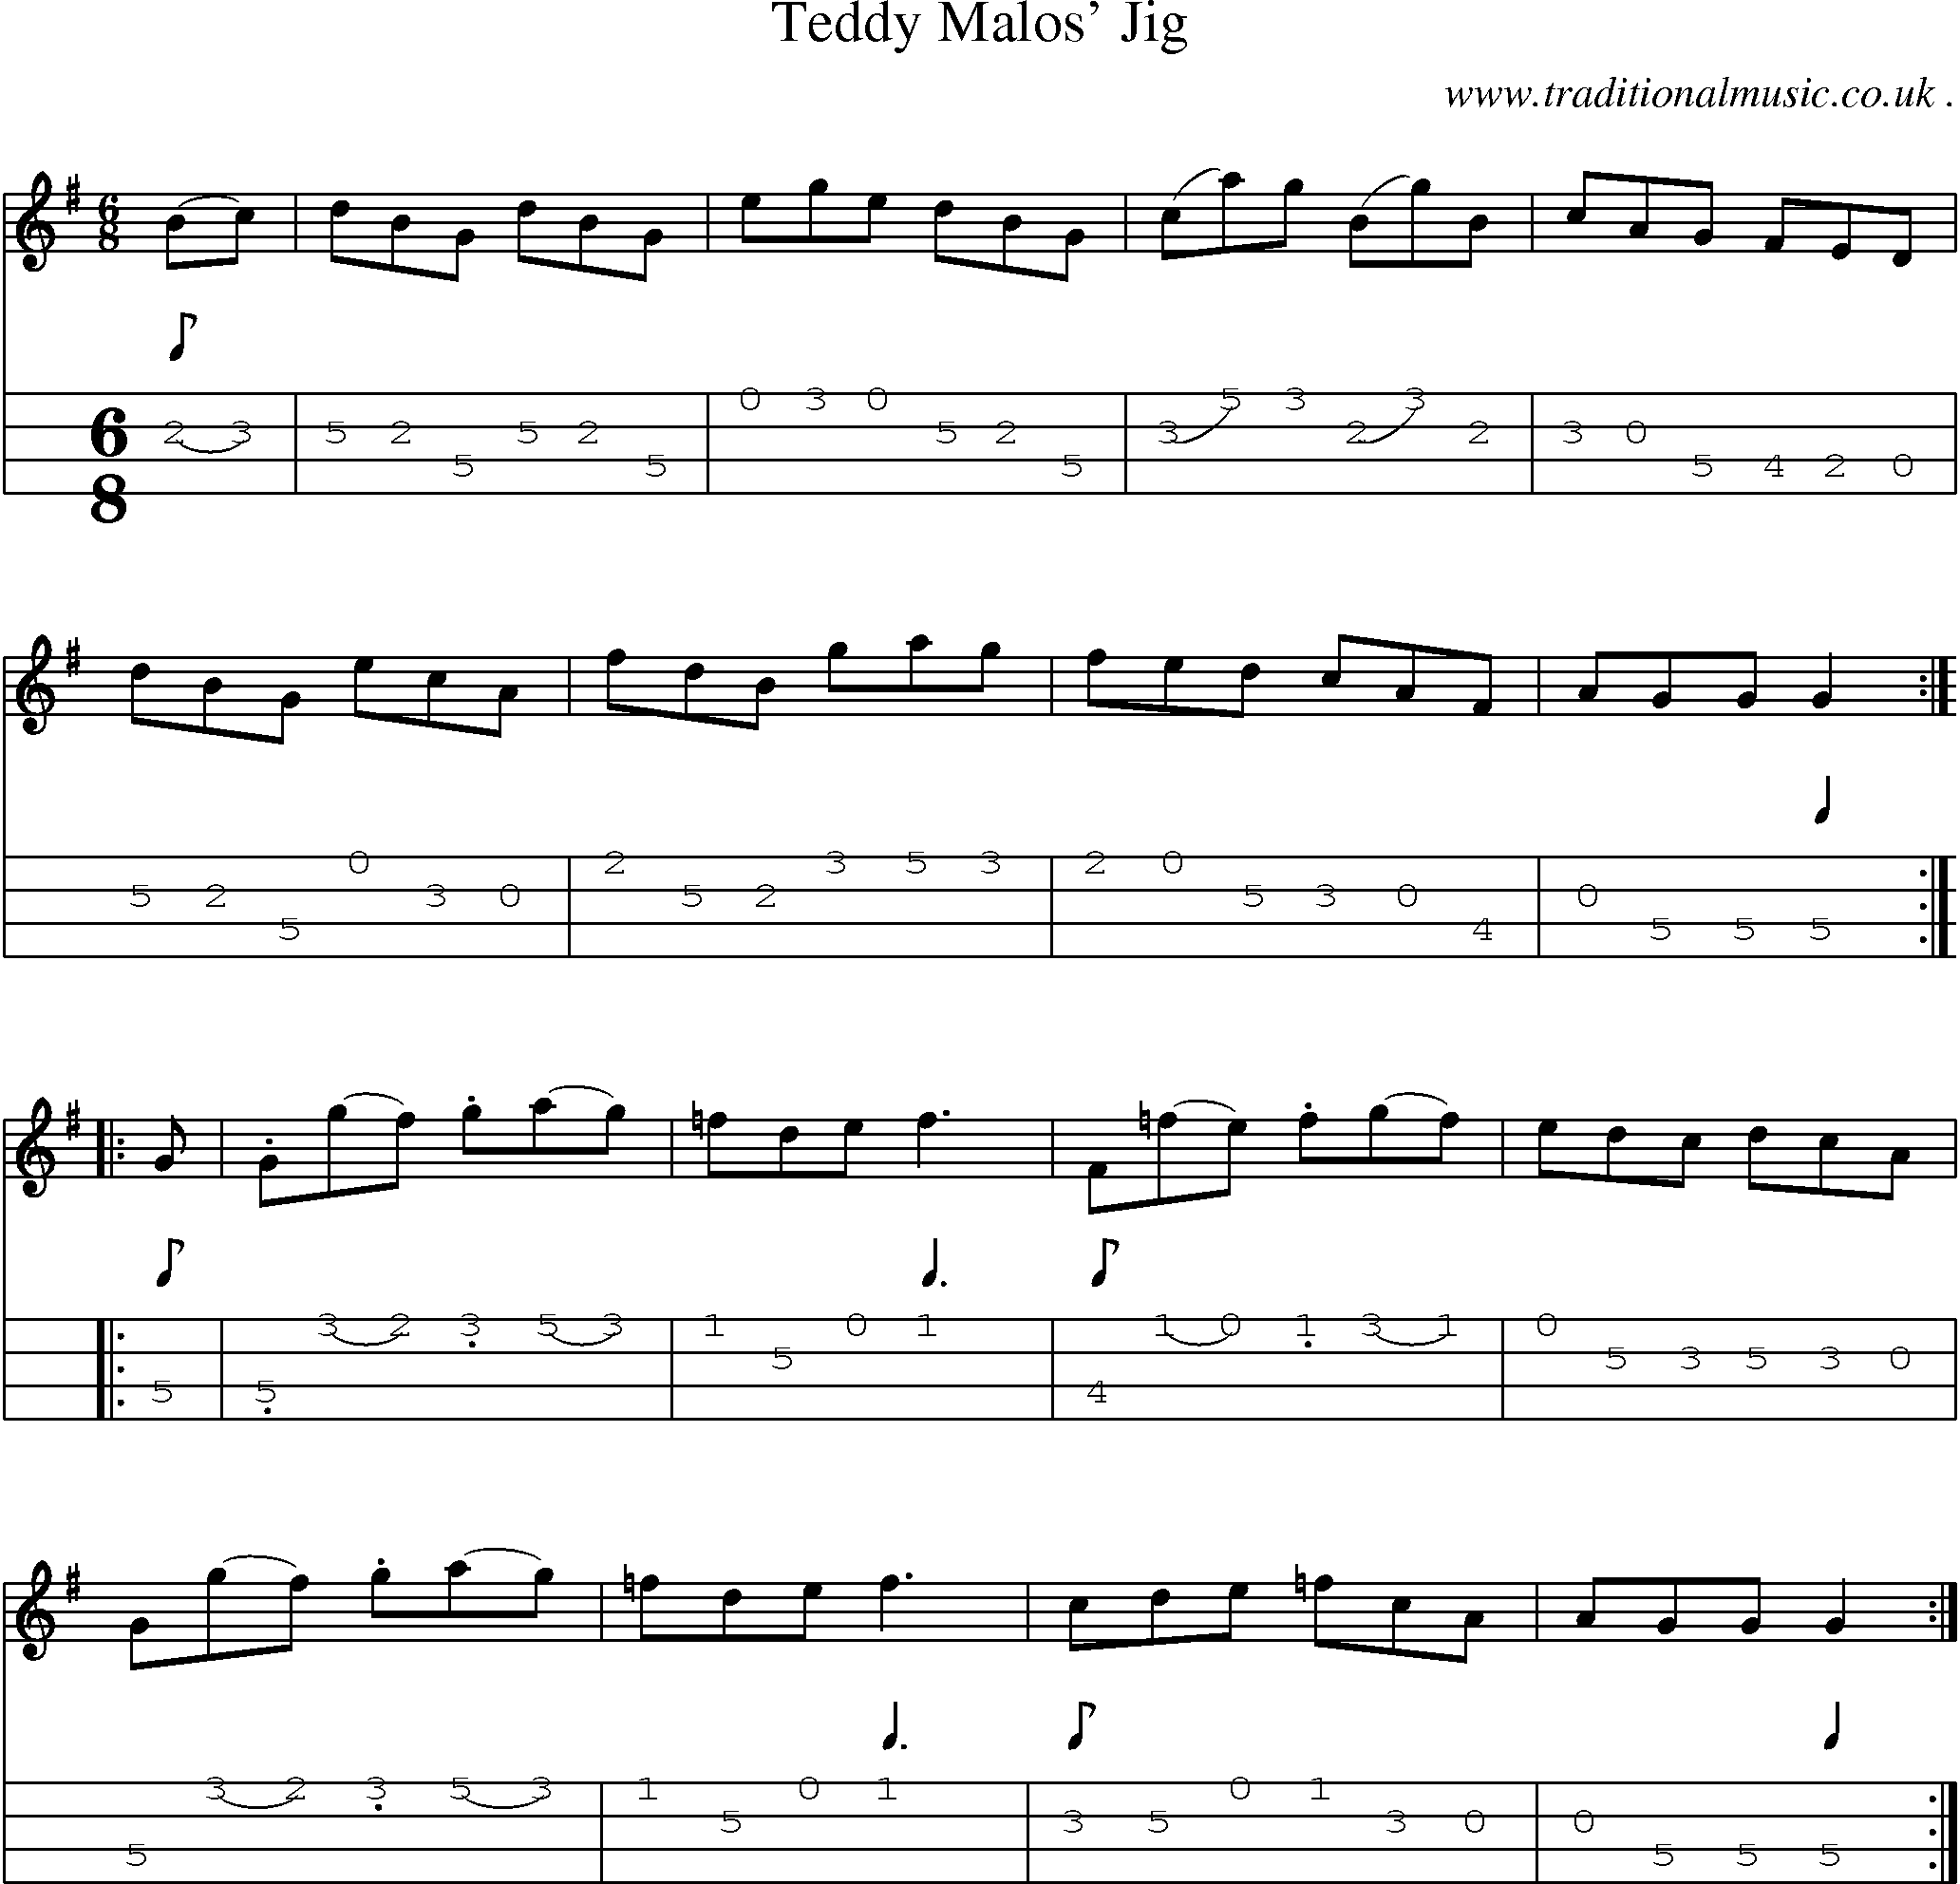 Sheet-Music and Mandolin Tabs for Teddy Malos Jig